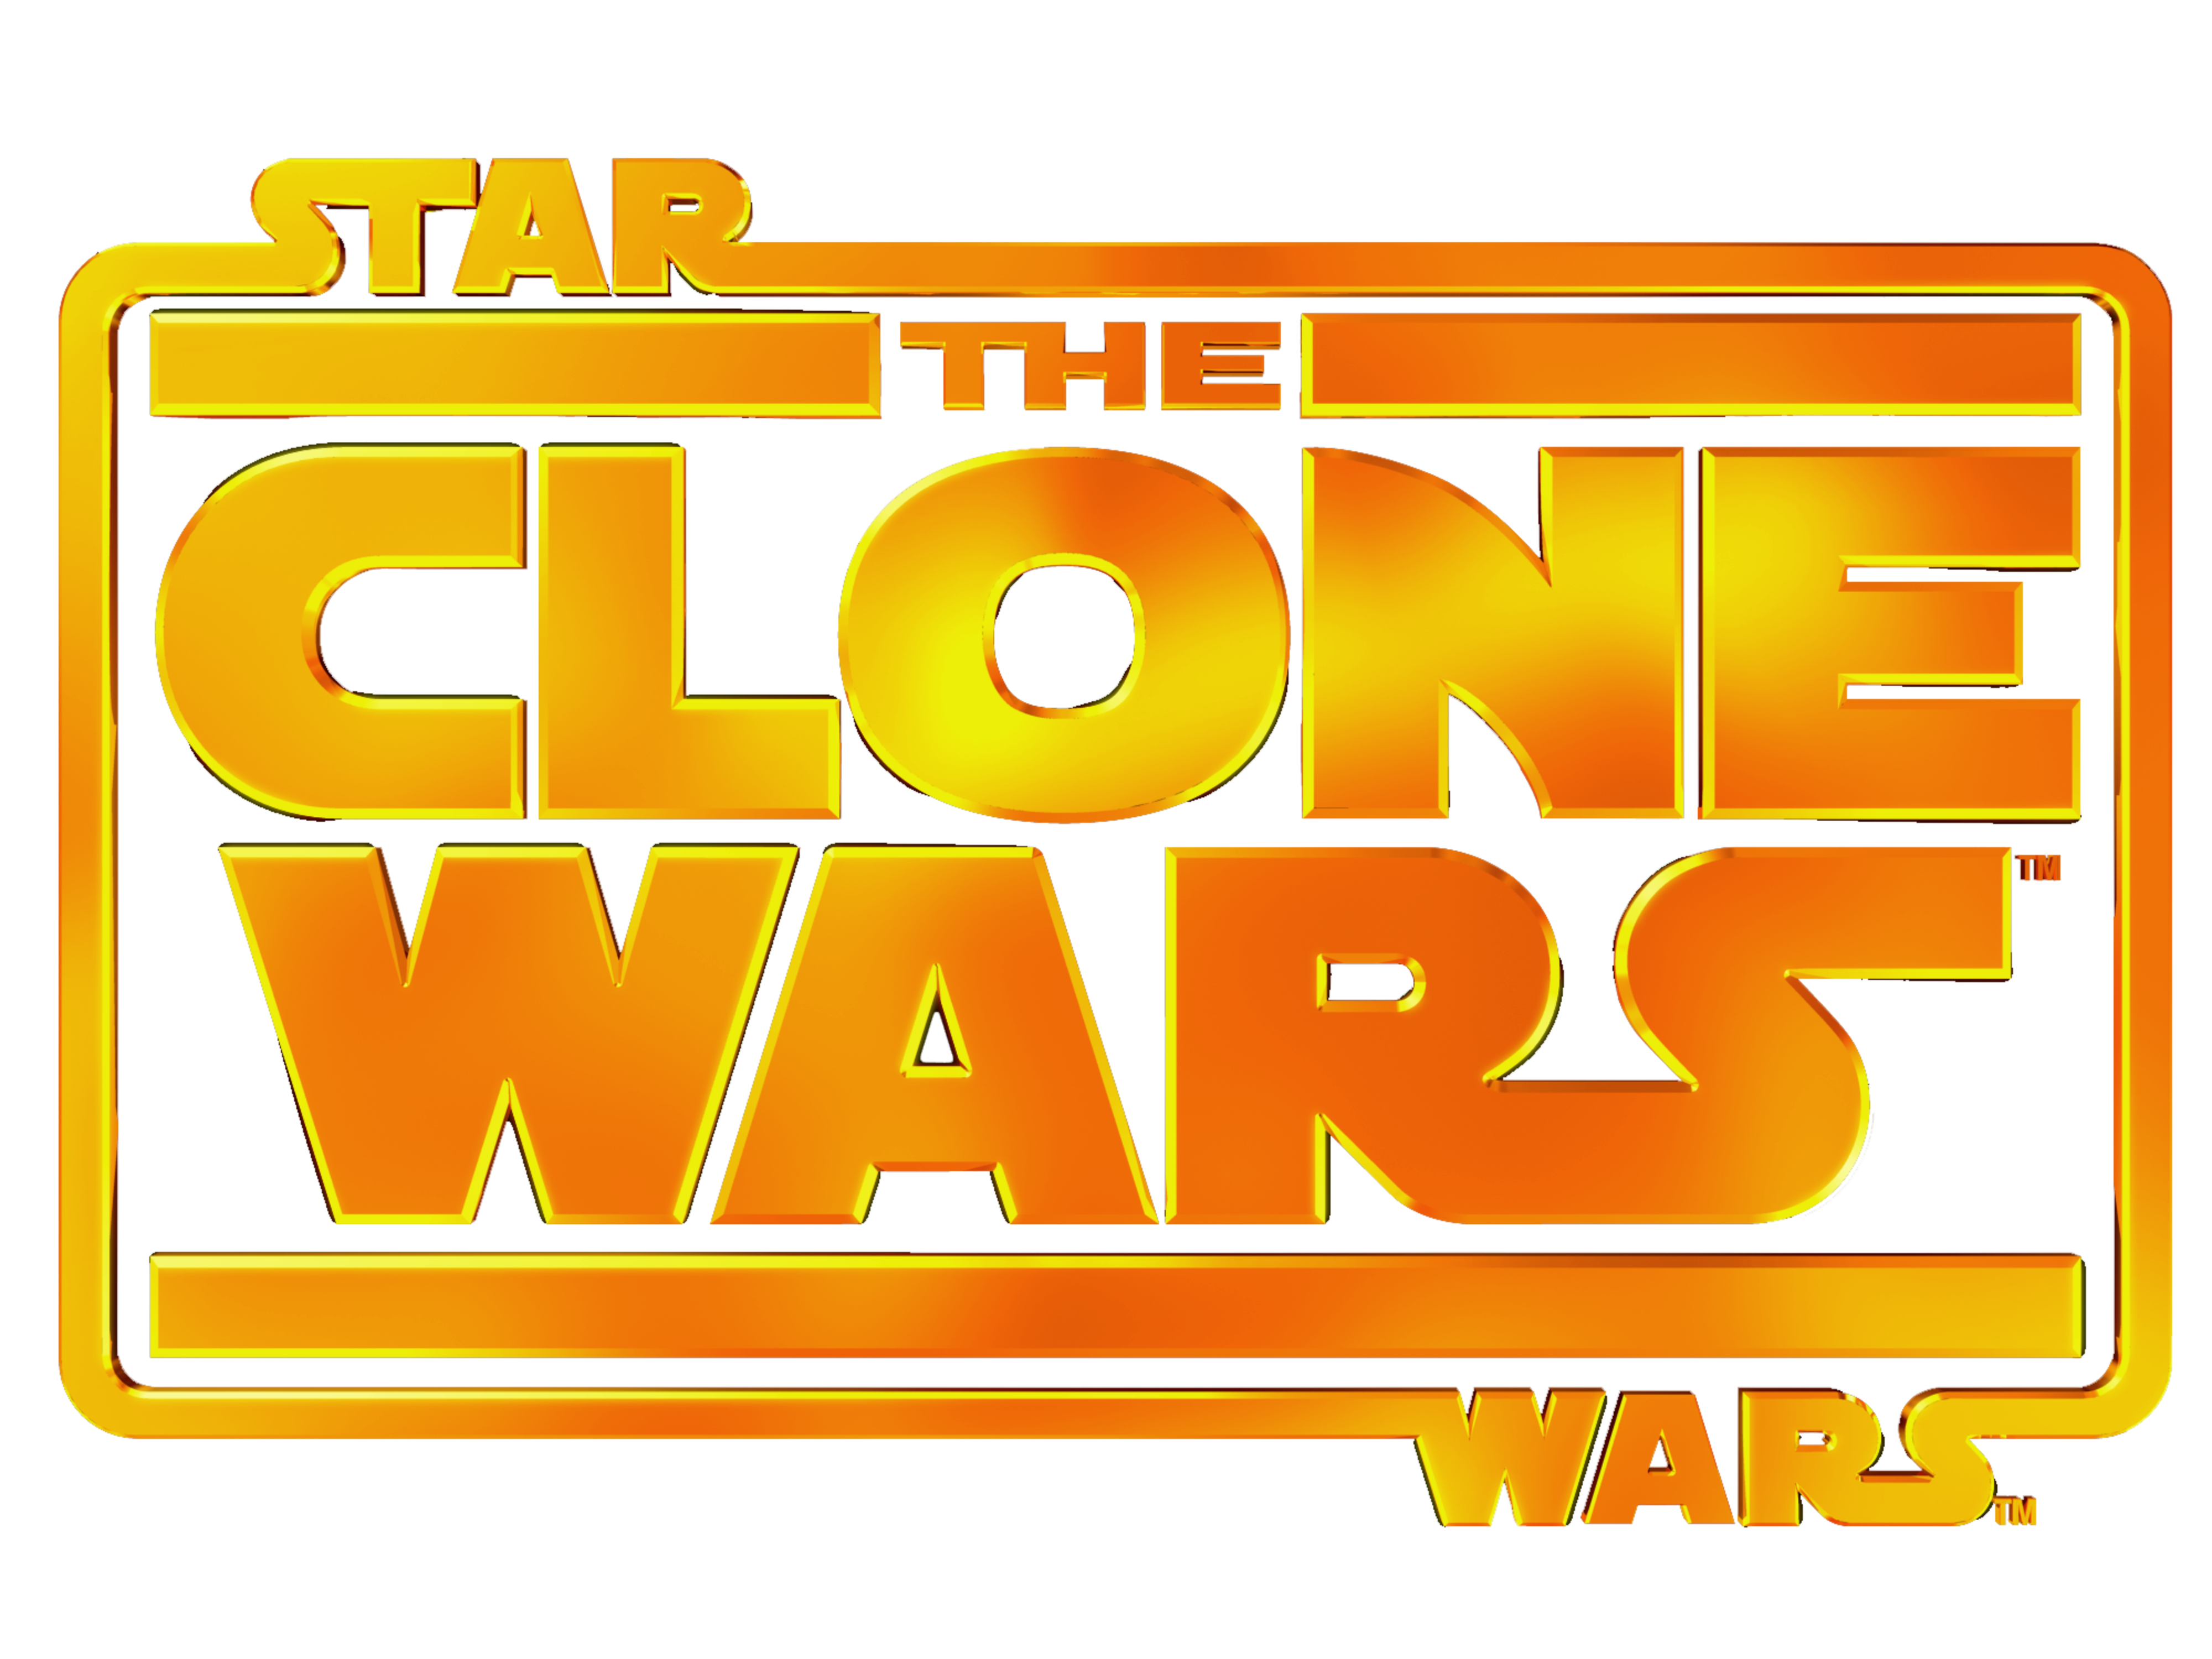 Star Wars: The Clone Wars 